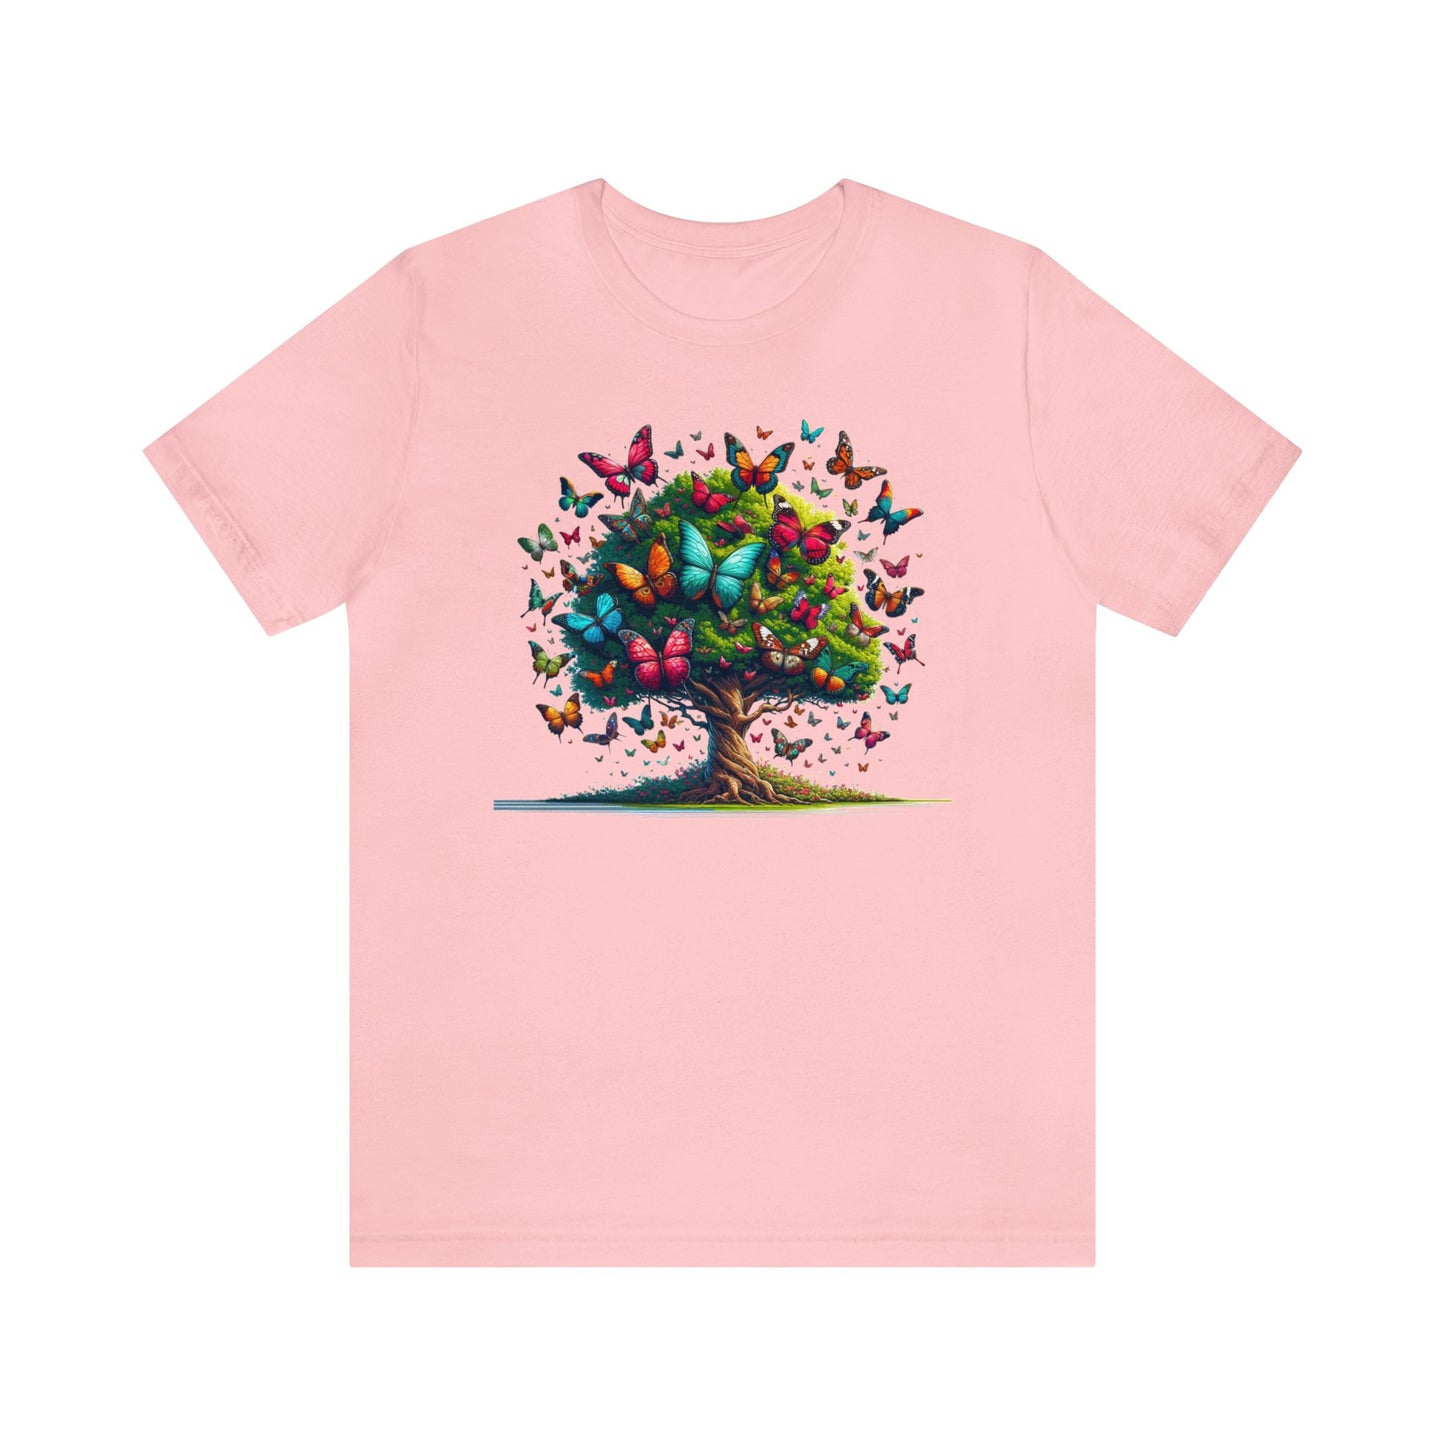 Butterflies Tree Tshirt, Butterfly Nature Garden Designer Graphic Aesthetic Crewneck Men Women Tee Top Short Sleeve Shirt